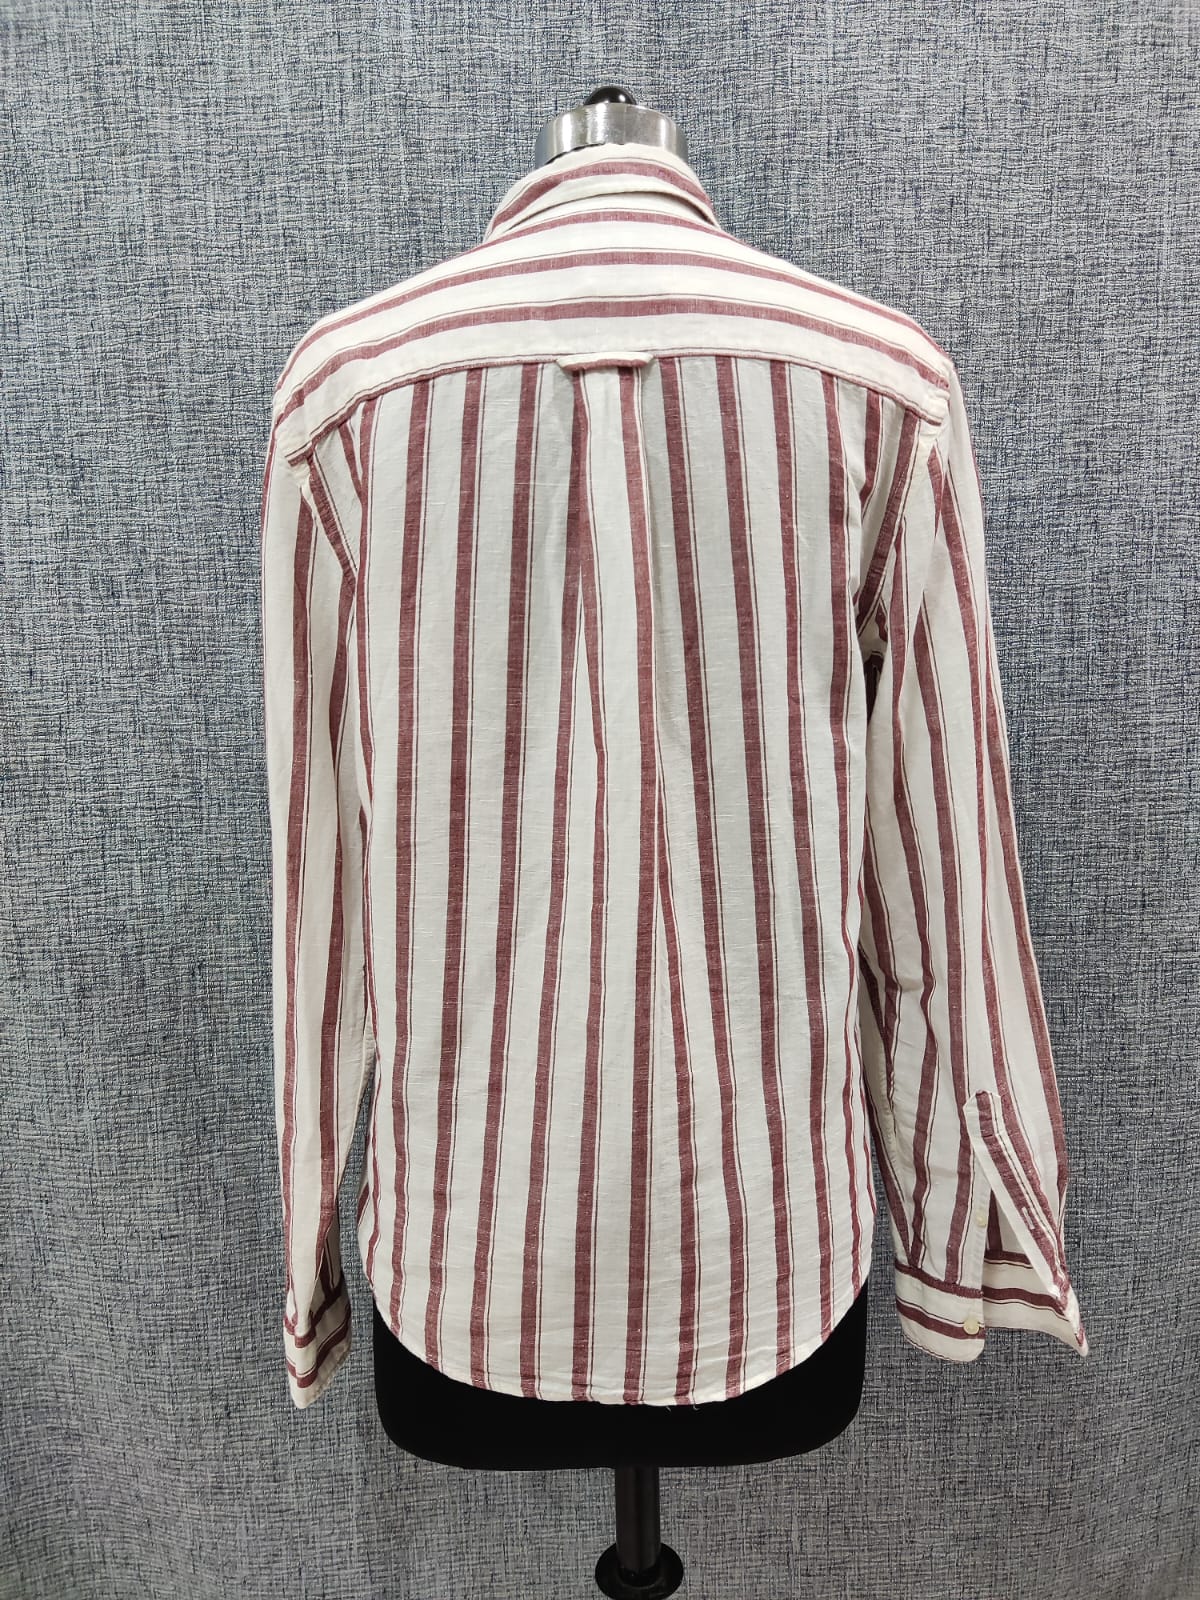 ZARA Red White Striped Linen Shirt | Relove